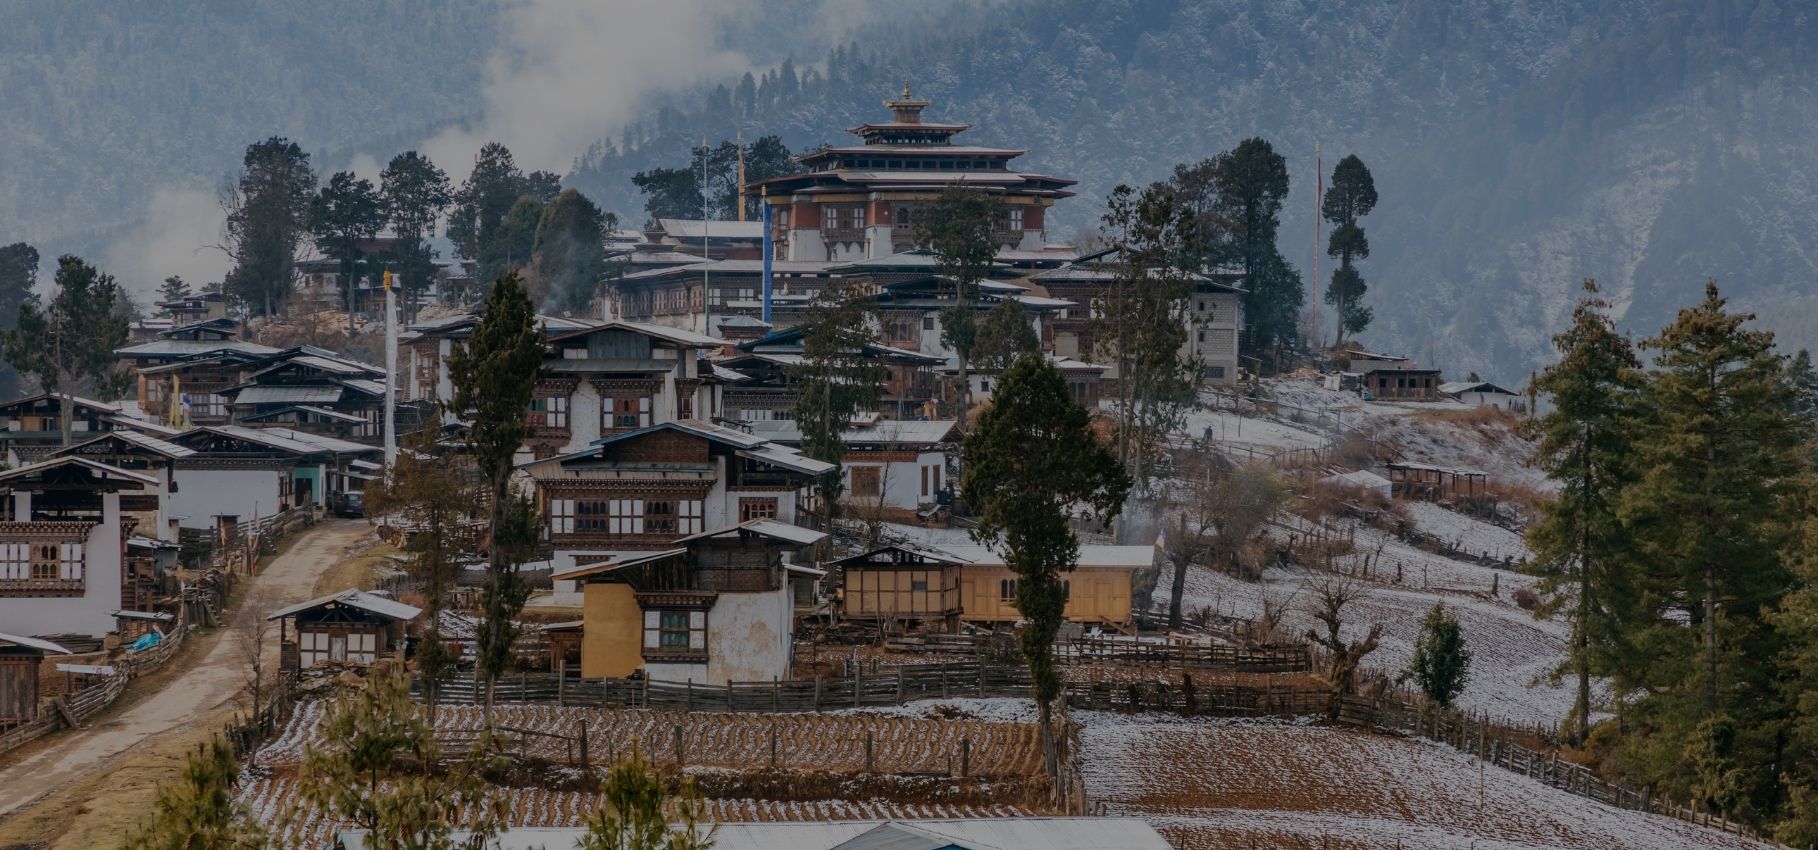 How to Visit Phobjikha Valley, Bhutan